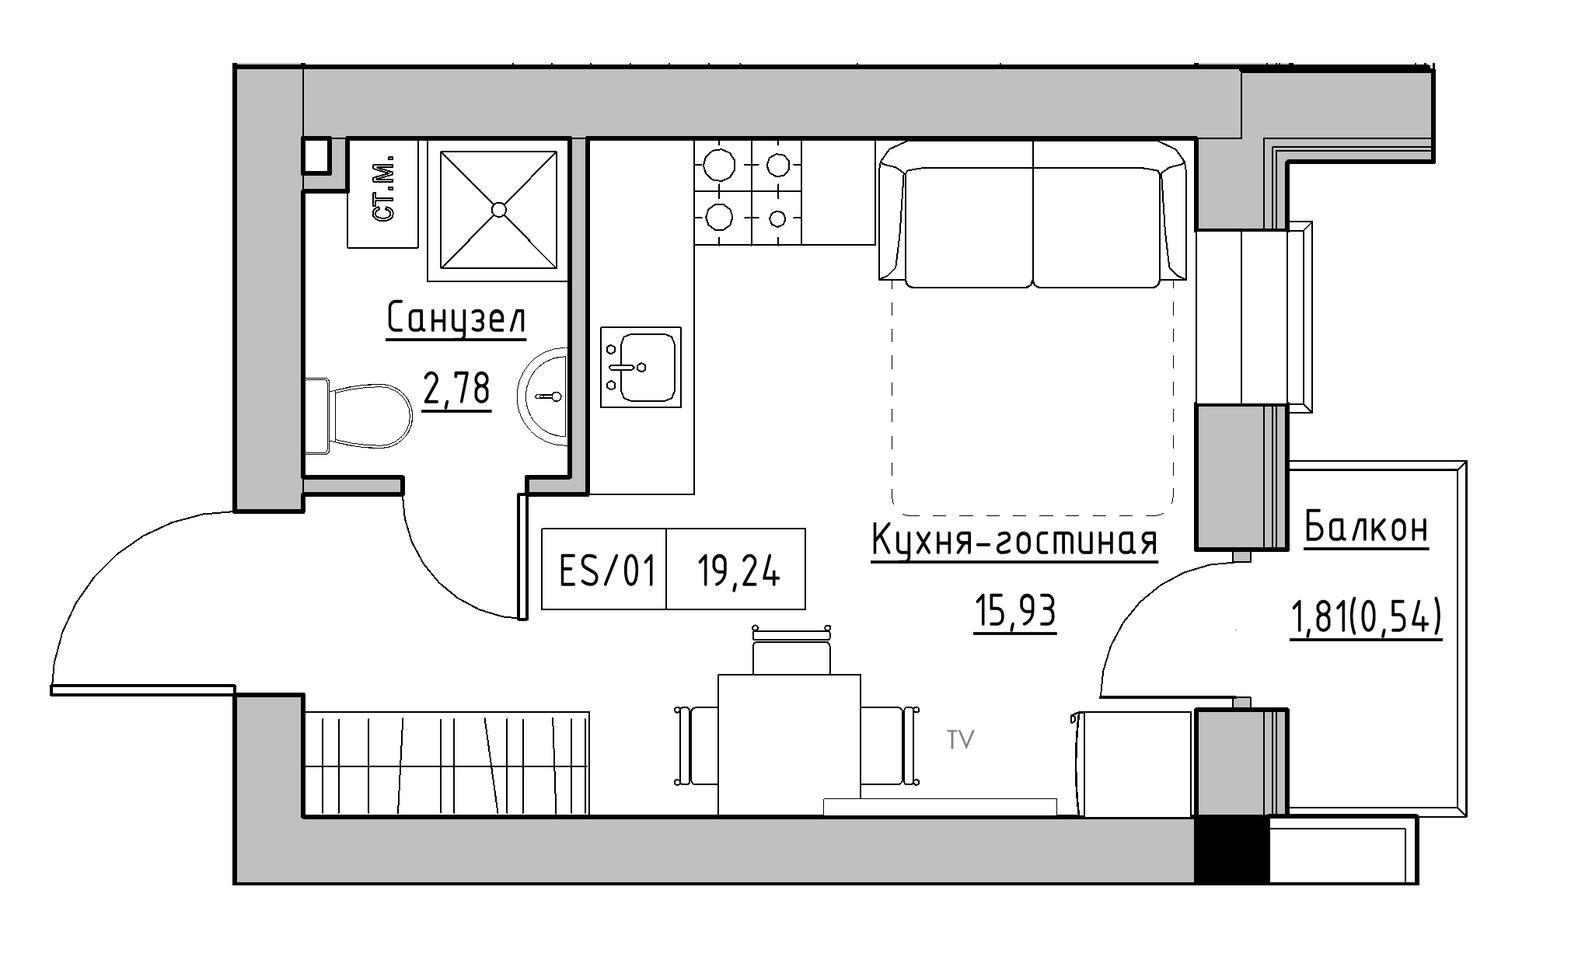 Planning Smart flats area 19.24m2, KS-014-05/0013.